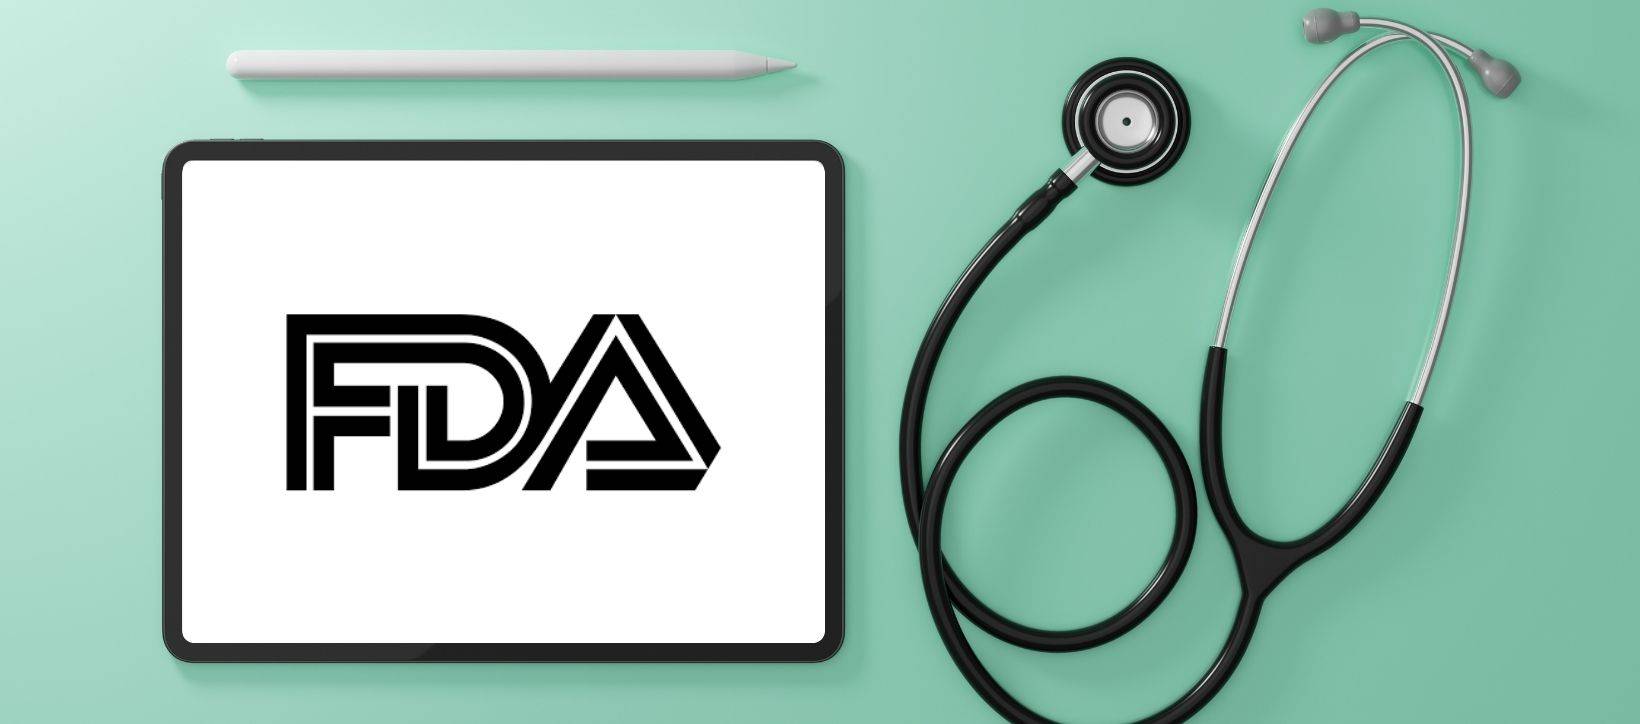 FDA ڈرافٹ گائیڈنس برائے 510(k) تھرڈ پارٹی ریویو پروگرام اور ایمرجنسی استعمال کی اجازت کا جائزہ: مواد اور فارمیٹ | ایف ڈی اے